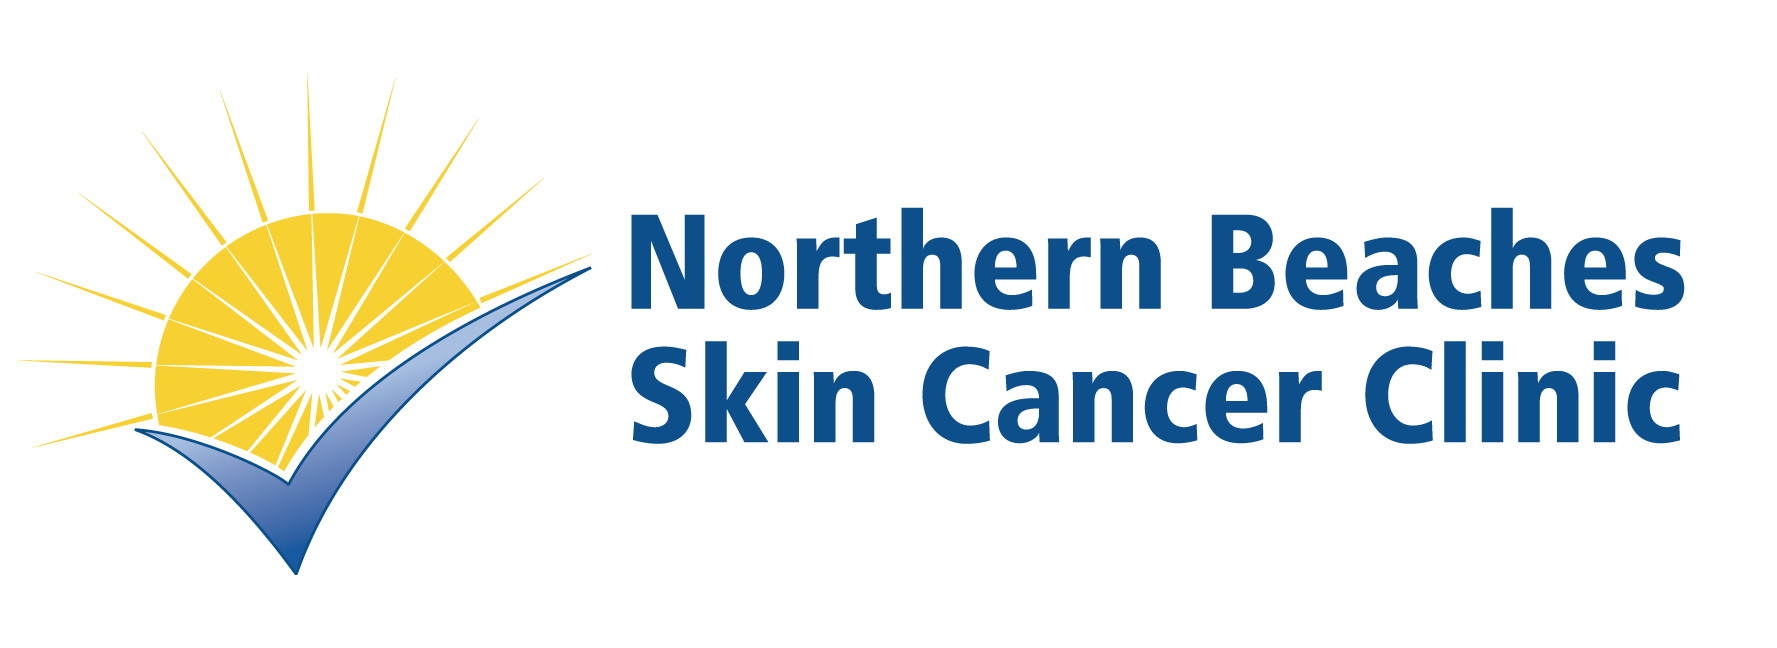 Northern Beaches Skin Cancer Clinics